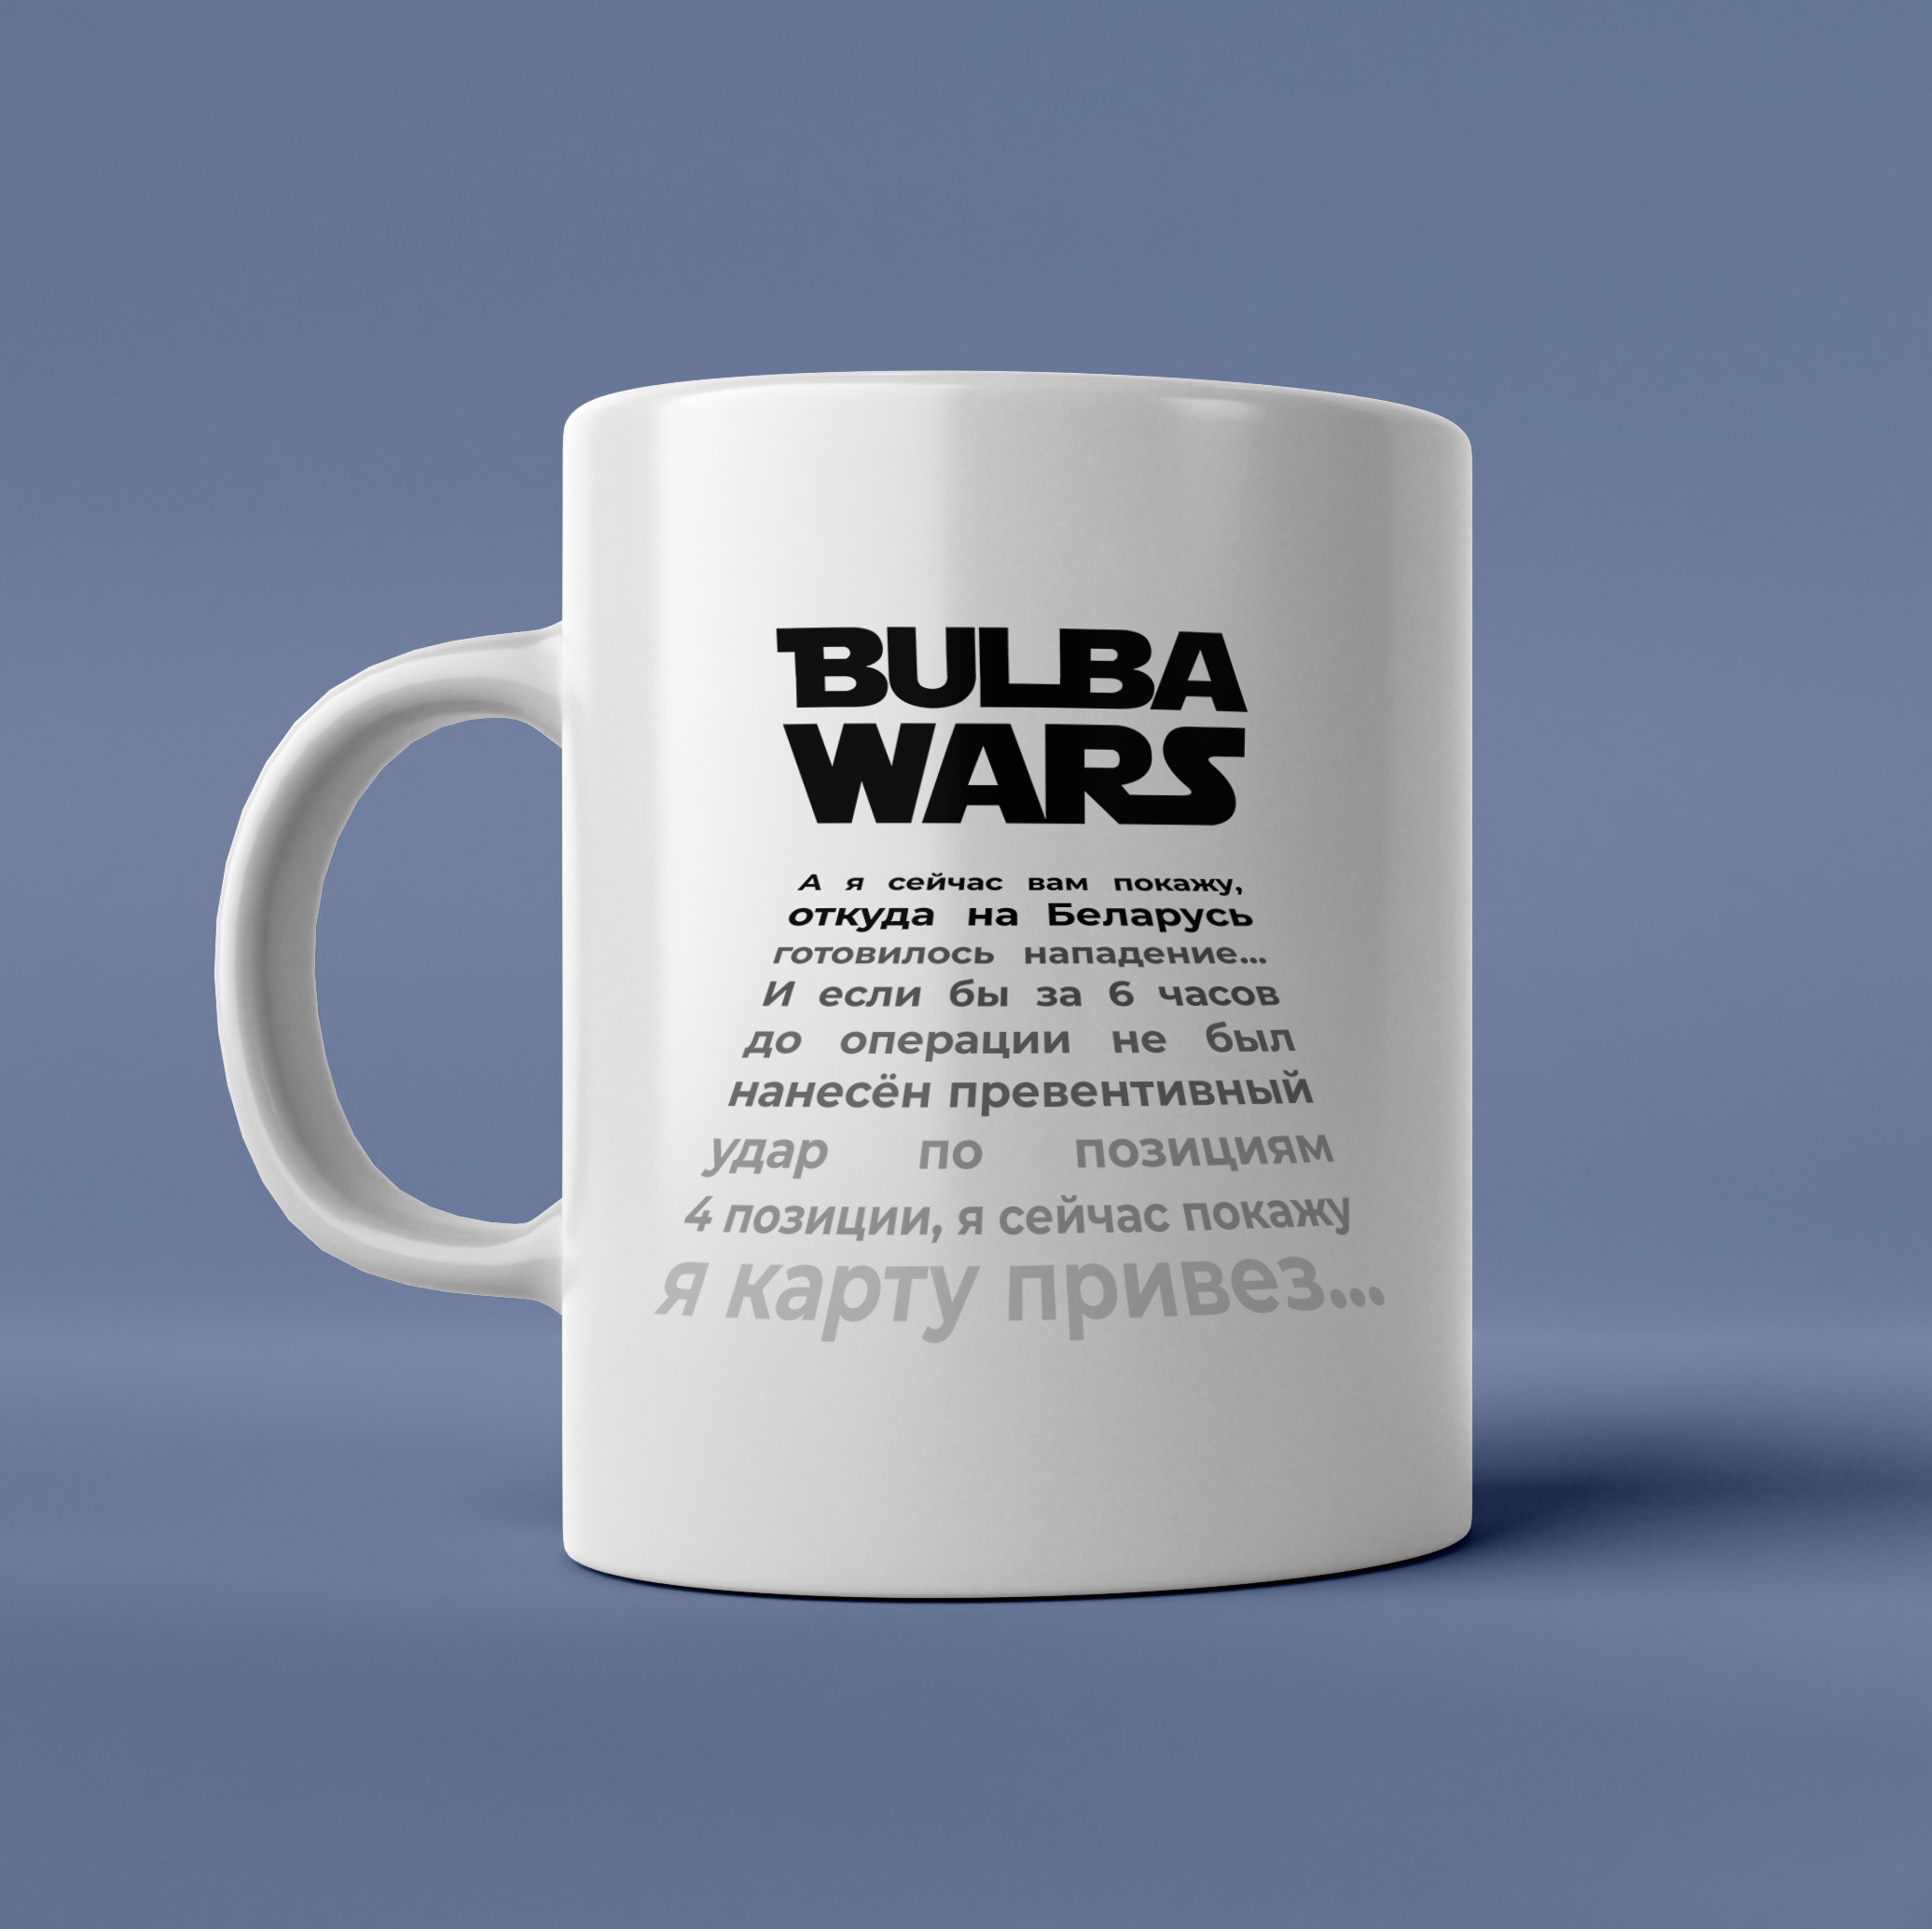 Bulba wars чашка